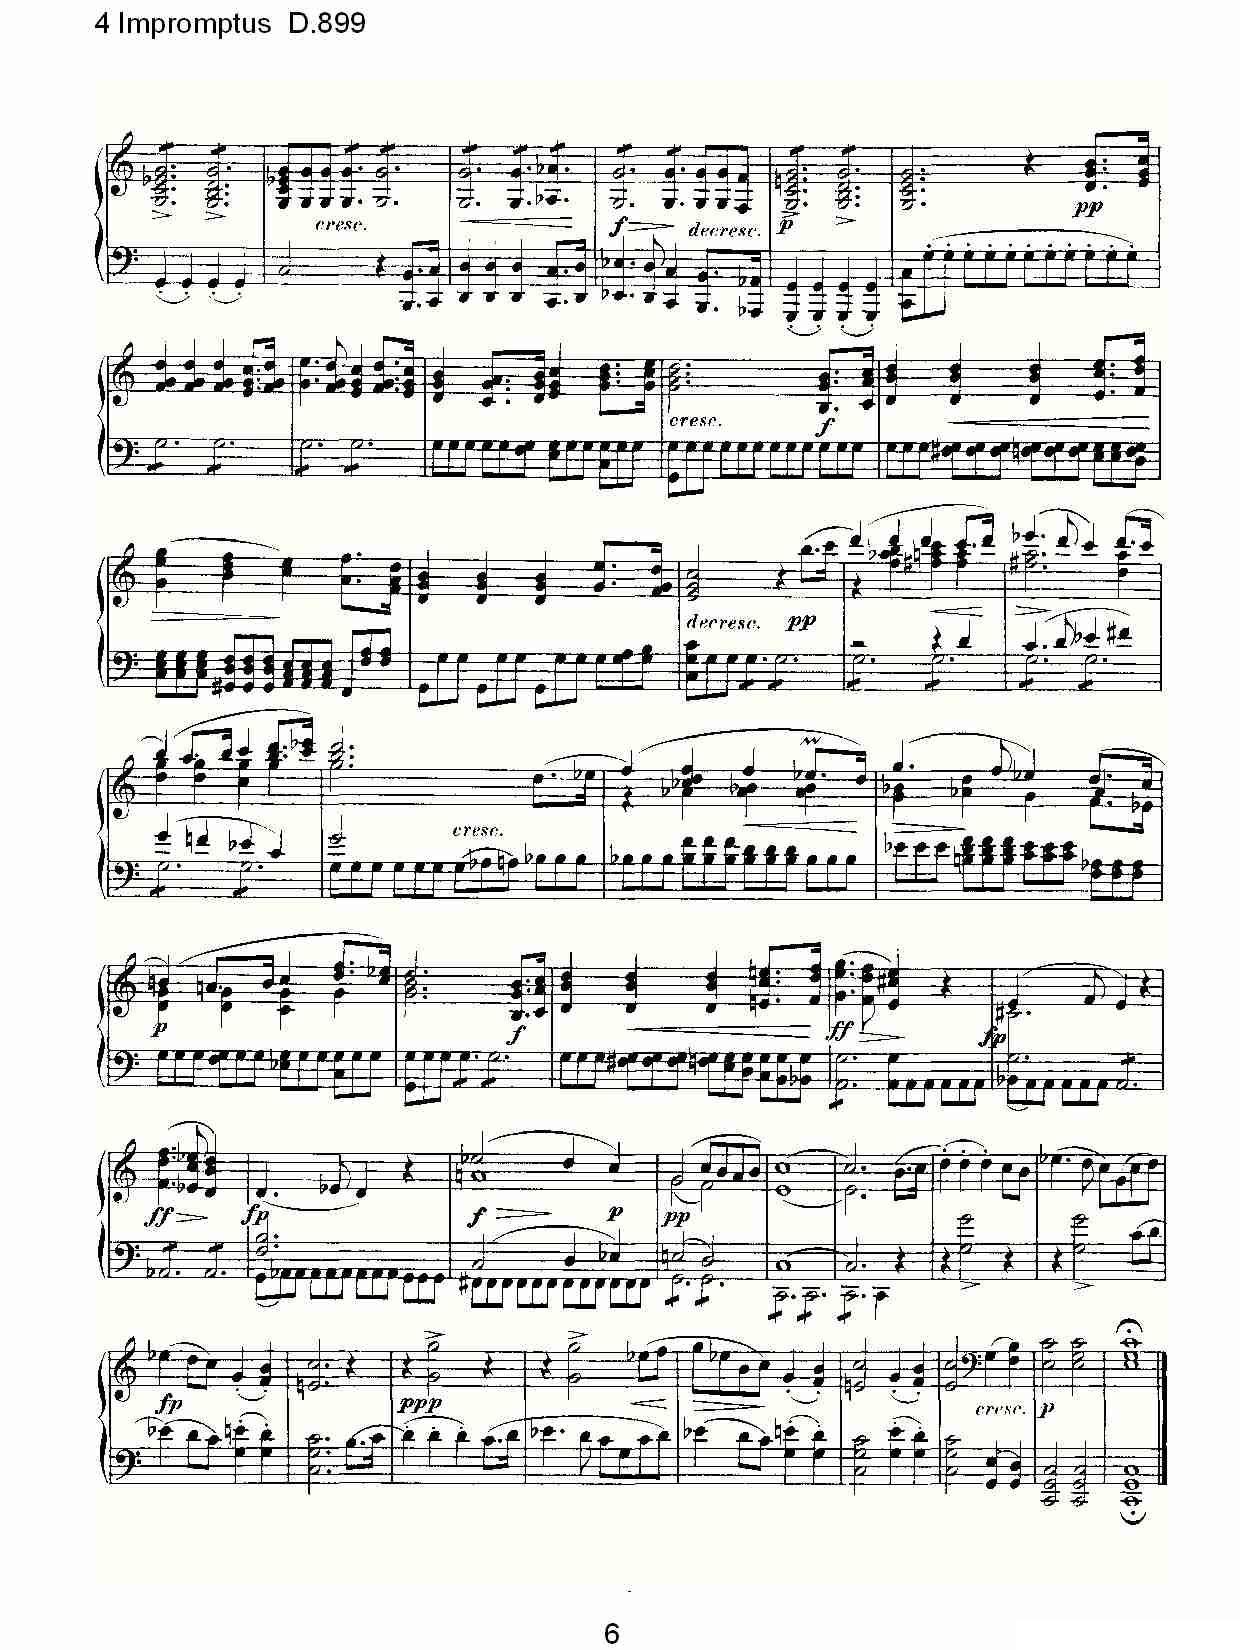 4 Impromptus D.899（4人即兴演奏 D.899）钢琴曲谱（图6）